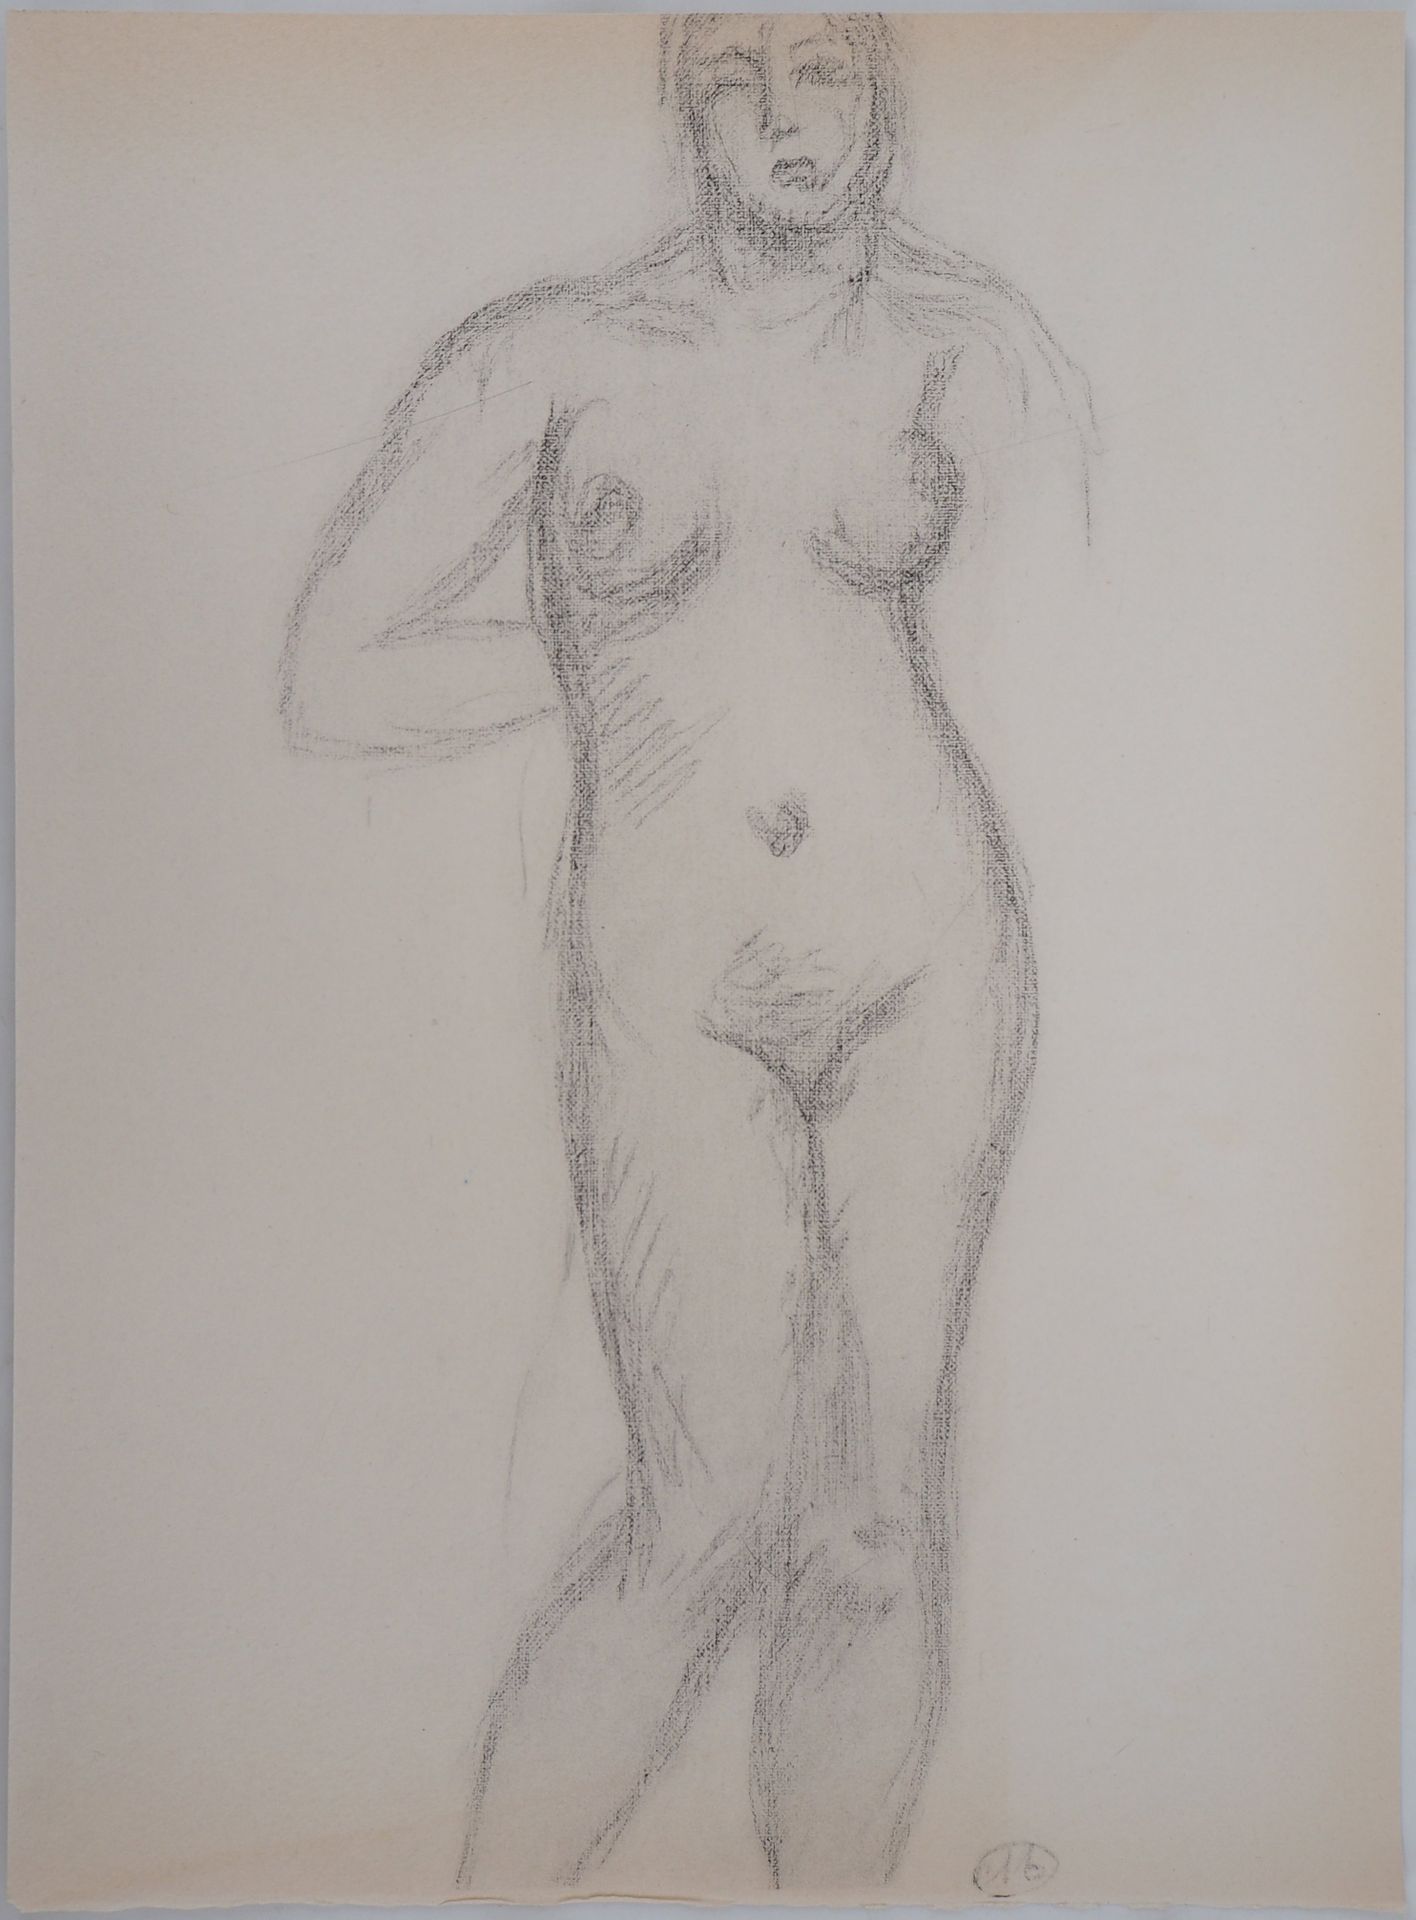 Aristide MAILLOL 阿里斯蒂德-马约尔（后）

女性裸体，1944年

绘画后的石版画

板块中的签名

牛皮纸上 28 x 20 厘米

状况非&hellip;